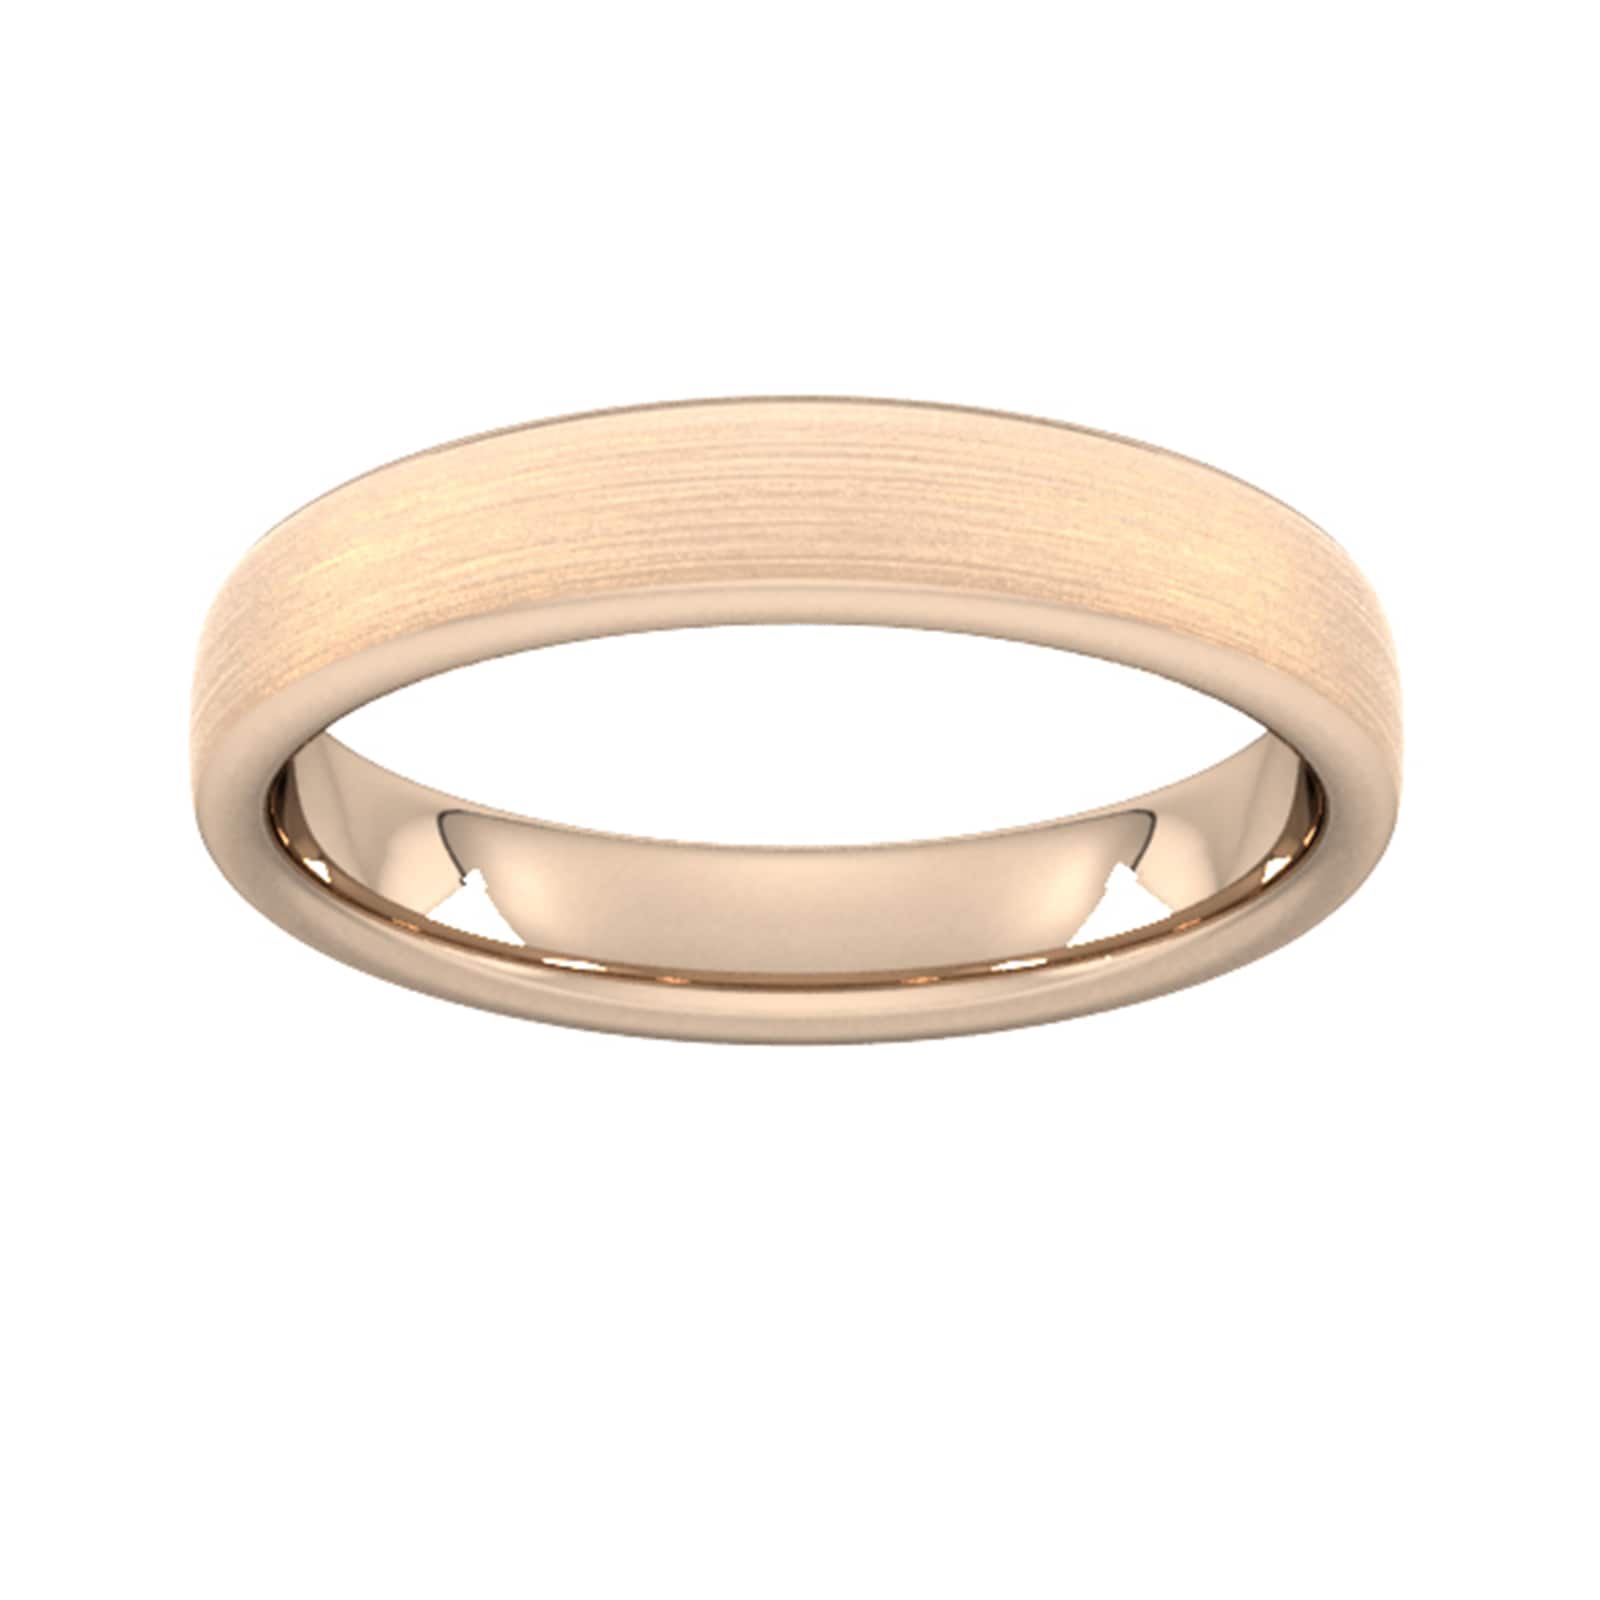 4mm Slight Court Heavy Matt Finished Wedding Ring In 9 Carat Rose Gold - Ring Size P